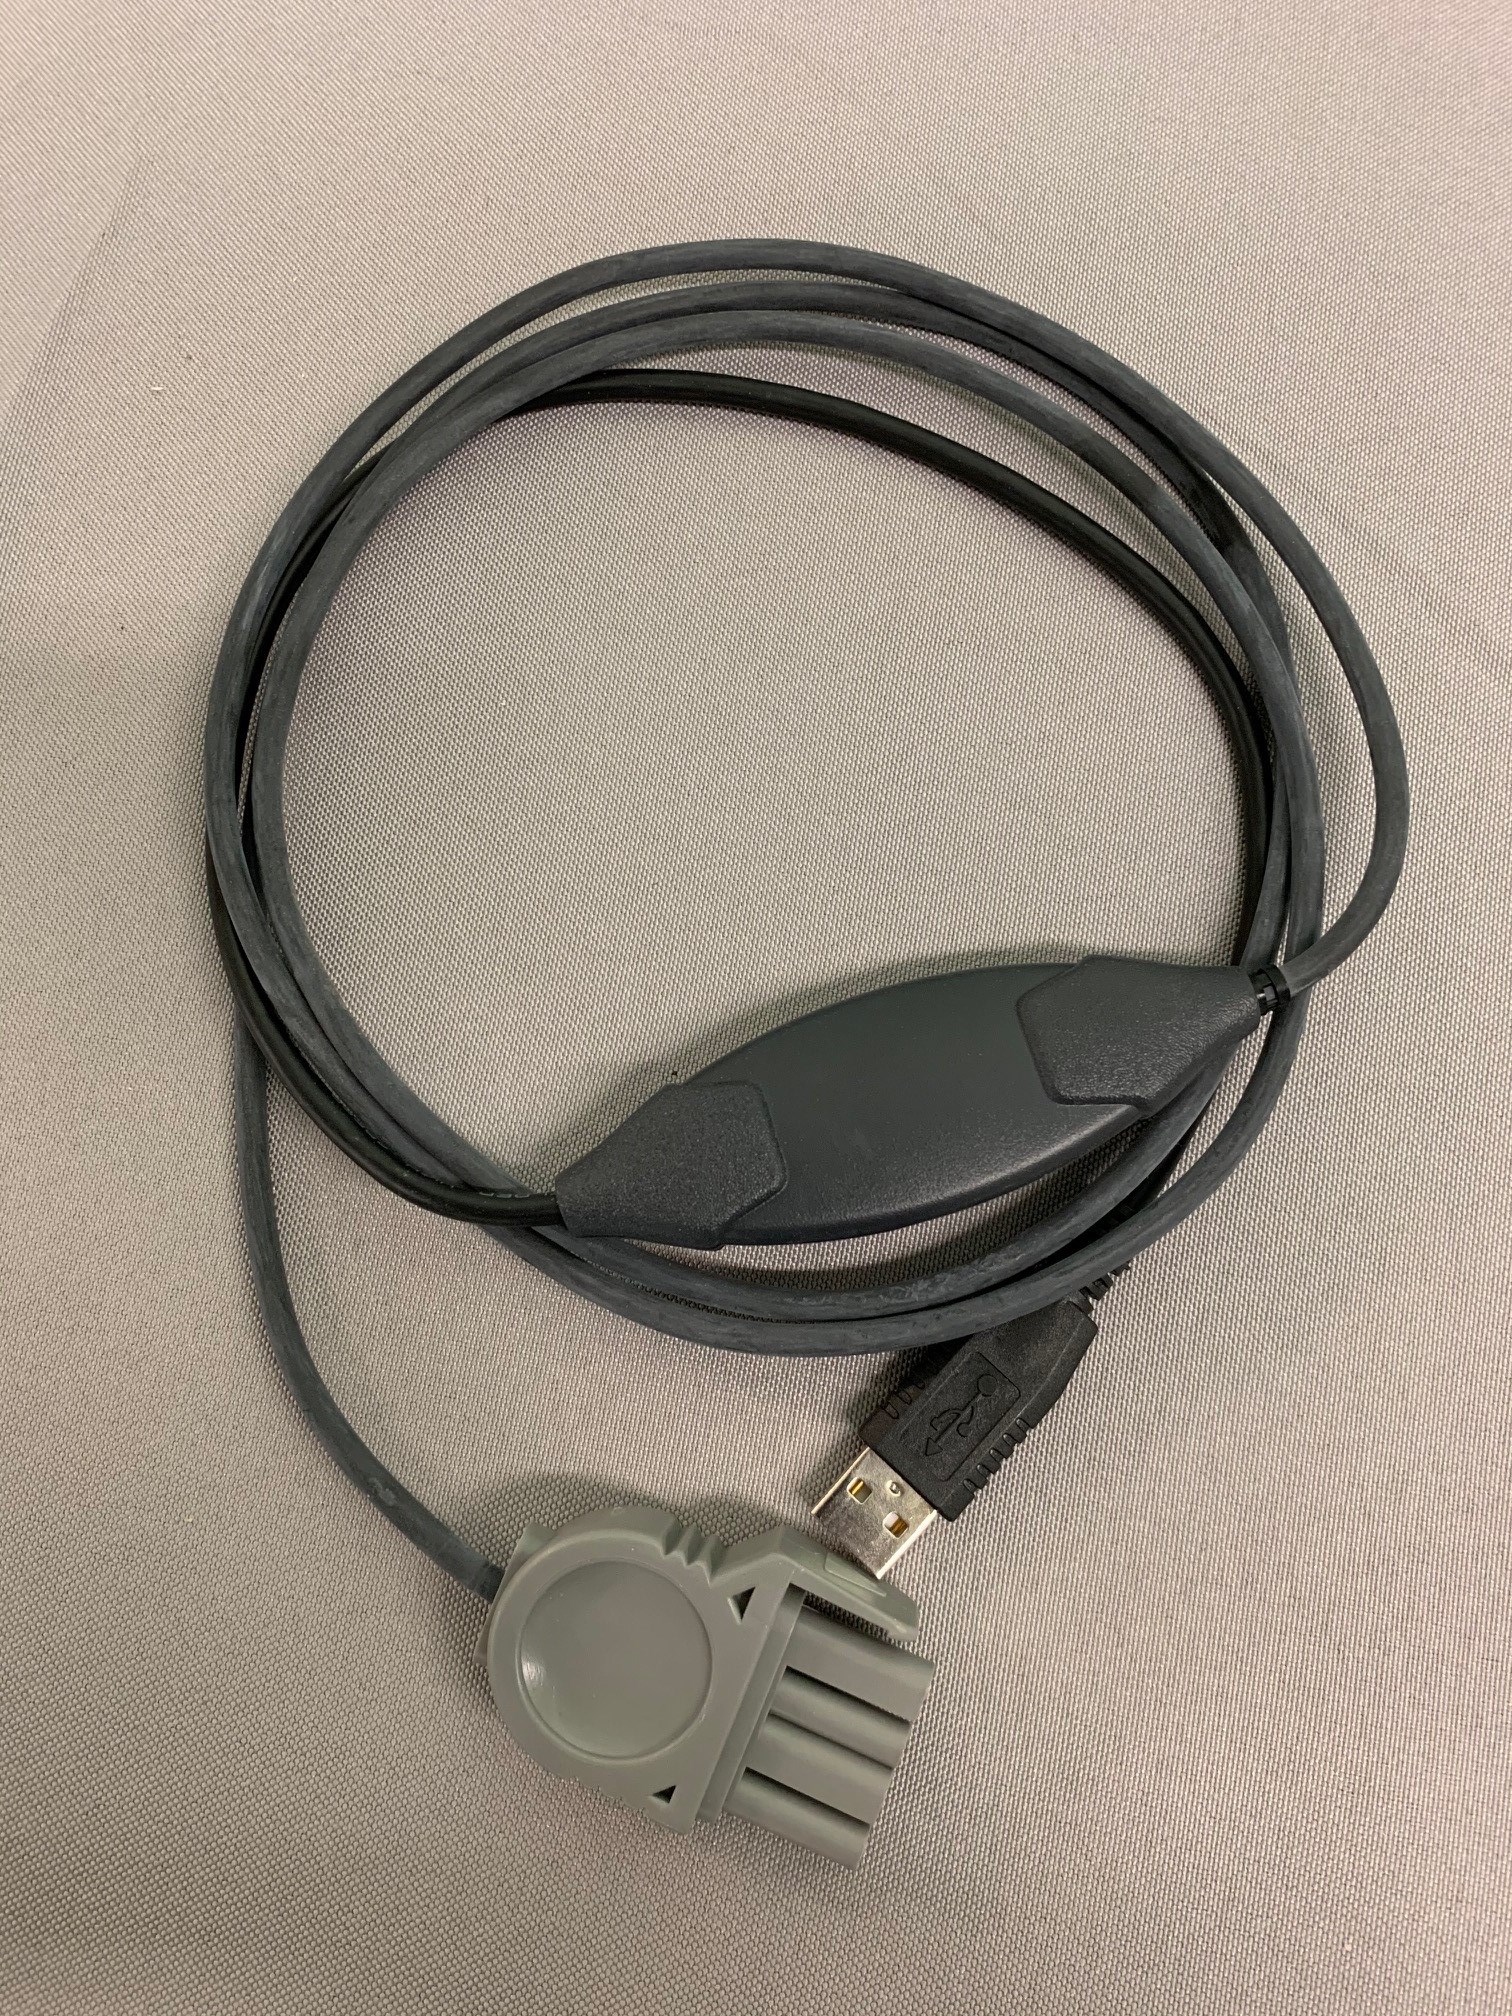 Ositech Communications USB Data Cable